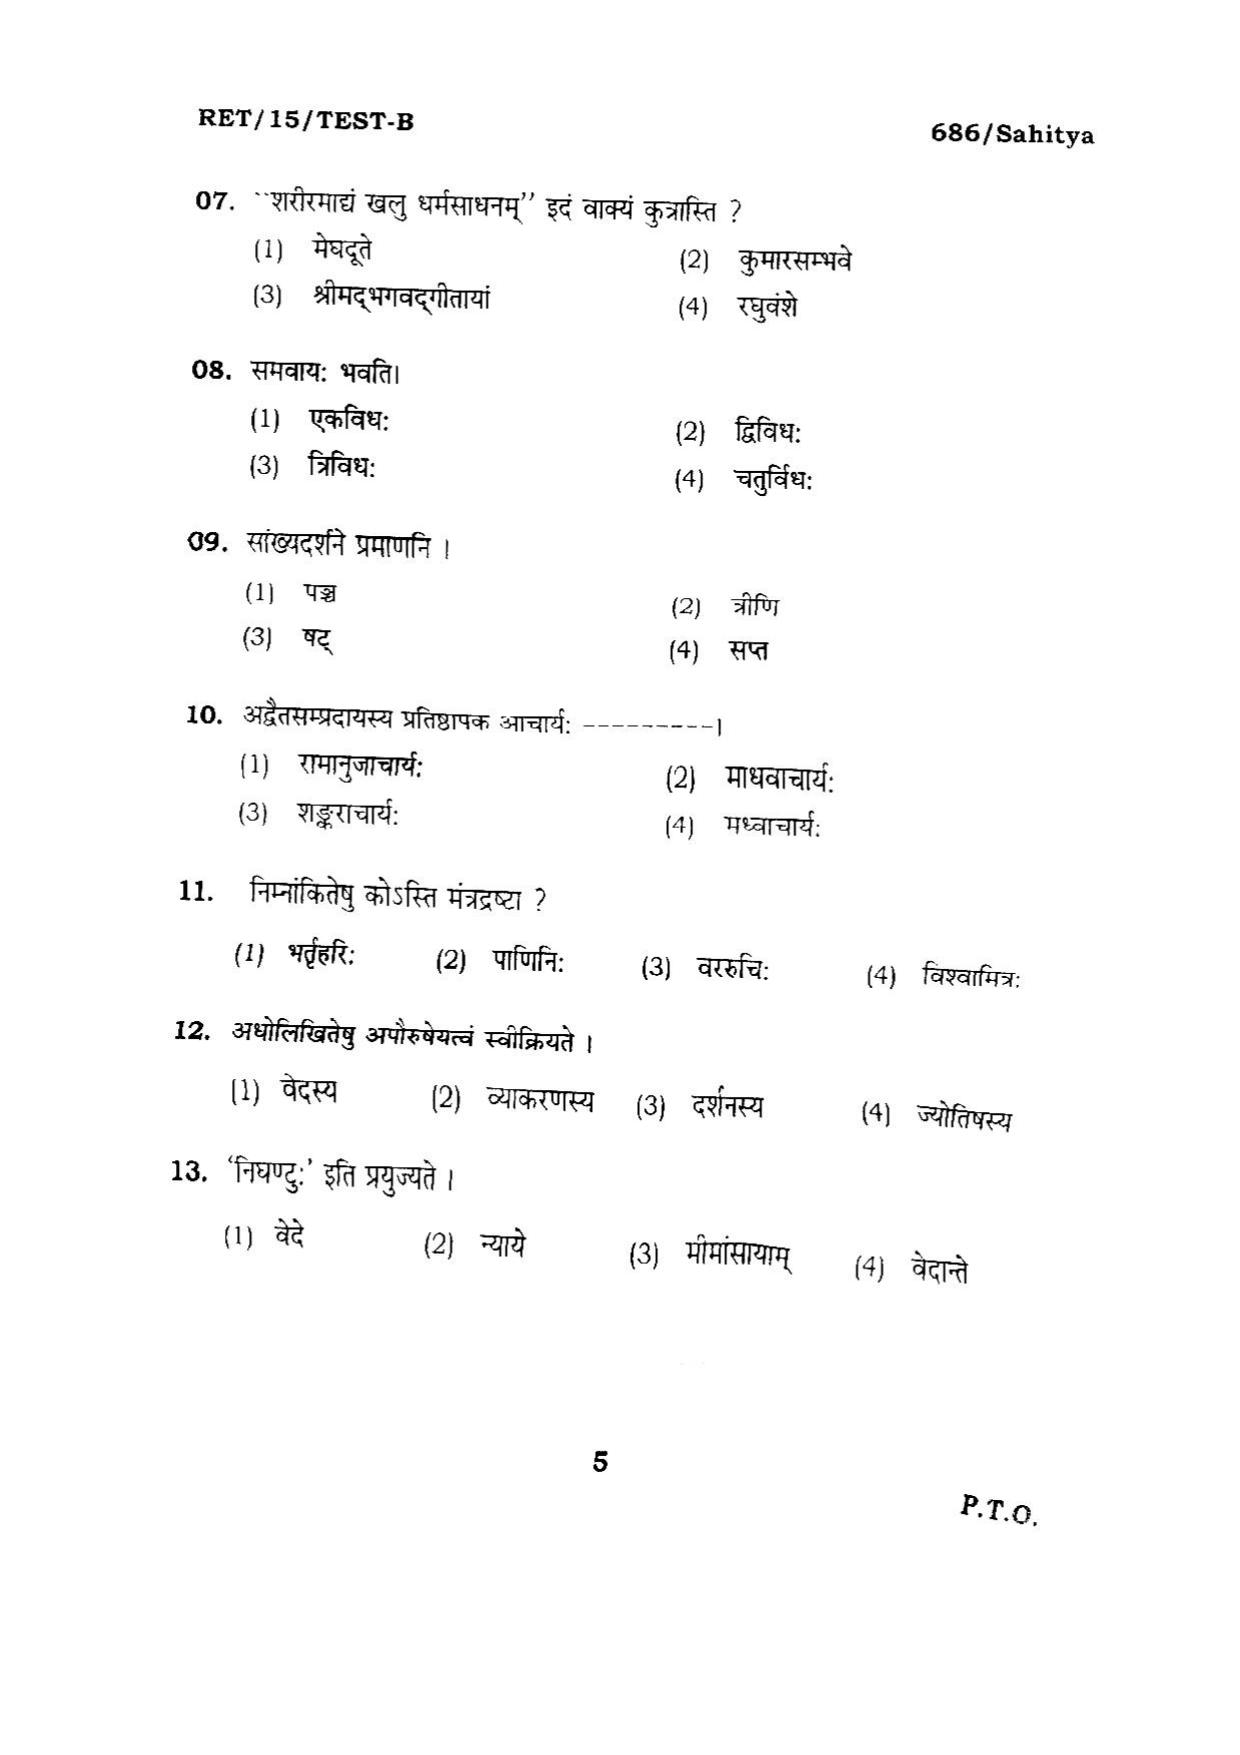 BHU RET SAHITYA 2015 Question Paper - Page 5